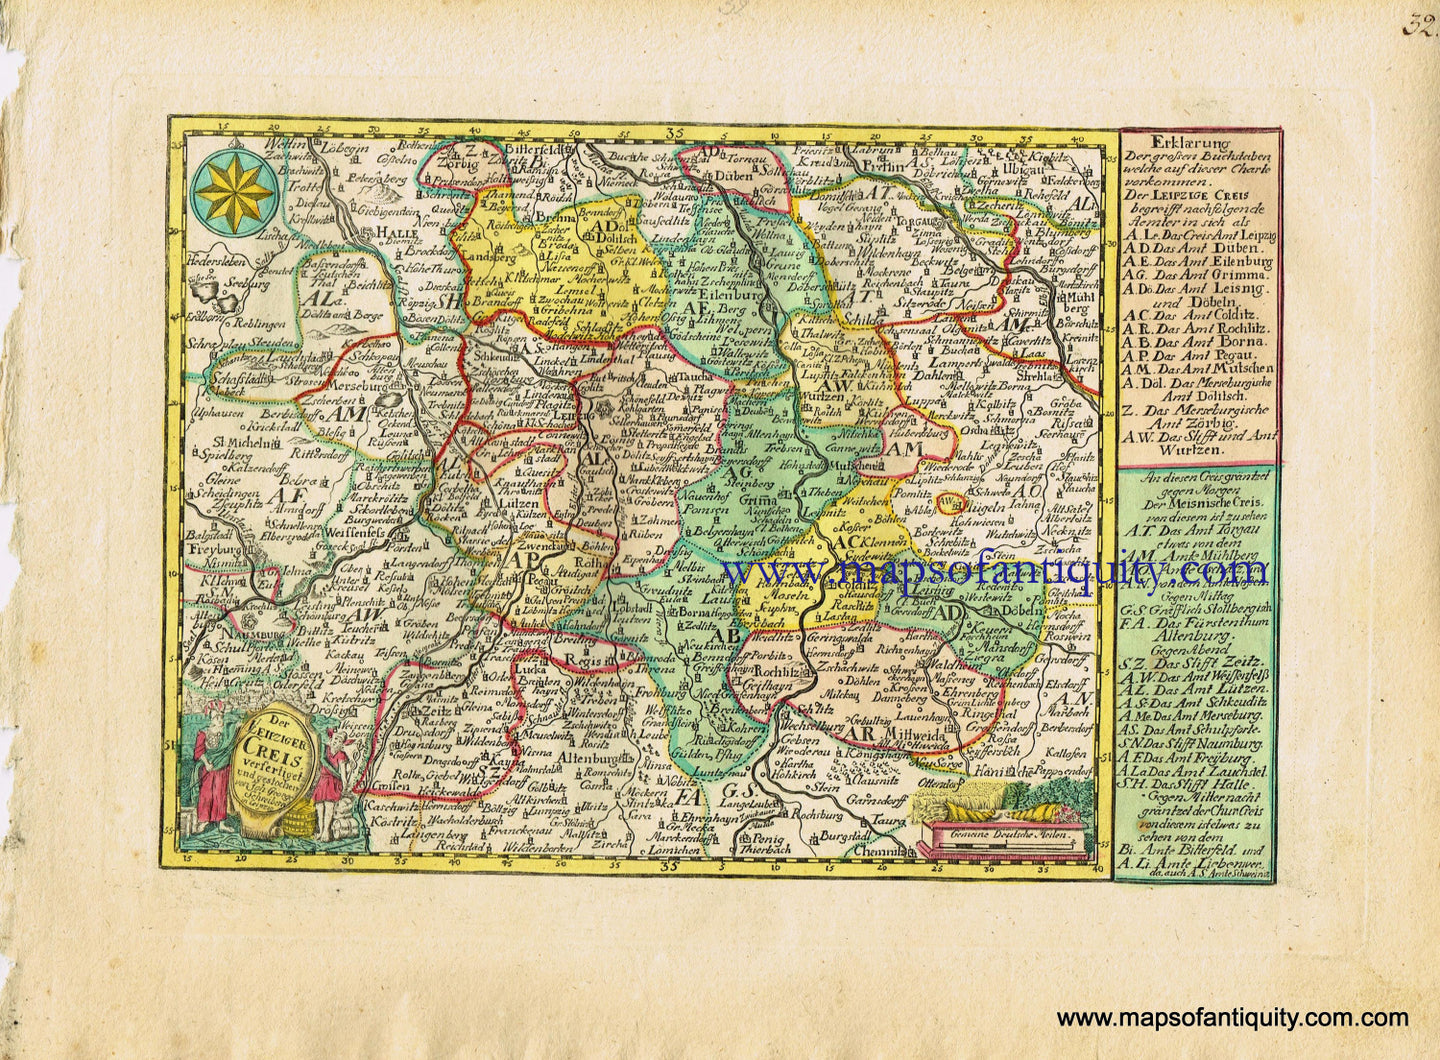 Antique-Hand-Colored-Map-Der-Leipziger-Creis-verferliget-Europe-Germany-1749-Johann-George-Schreibern-Maps-Of-Antiquity